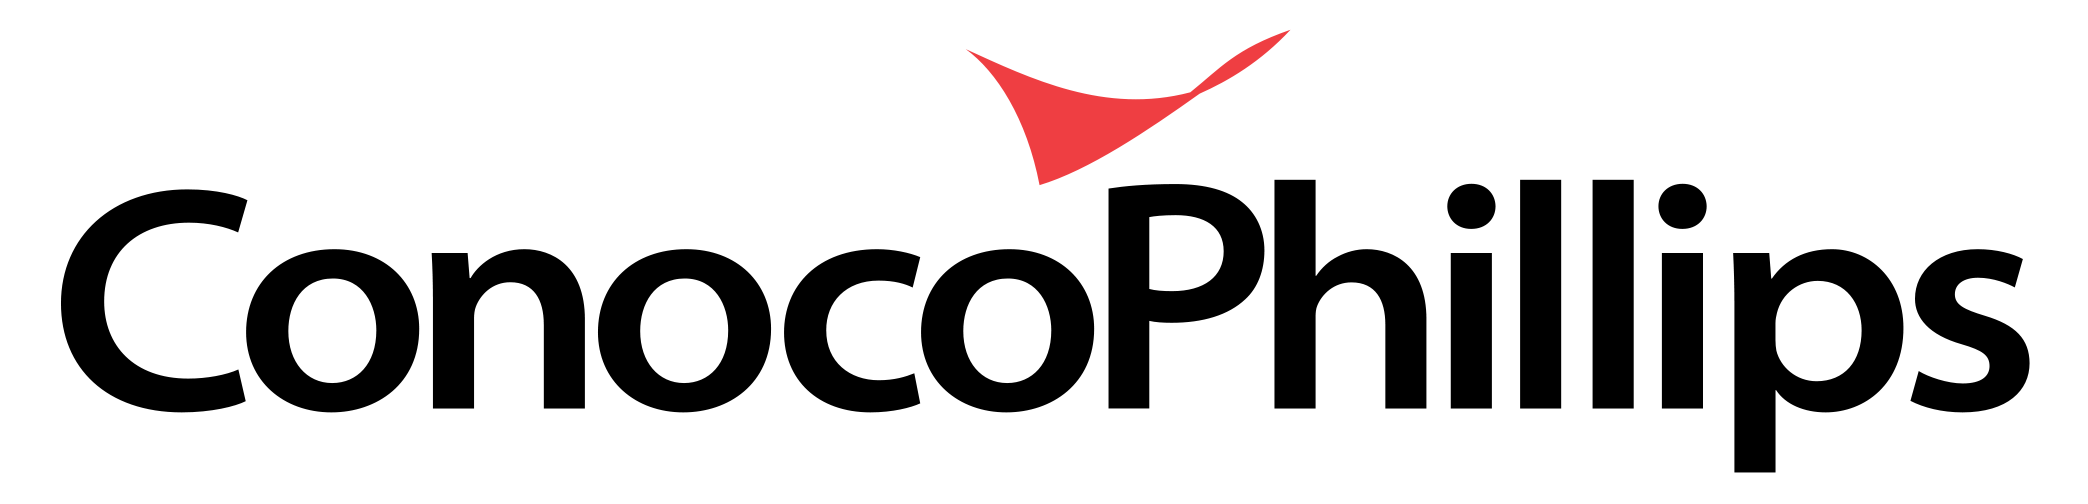 ConocoPhillips Logo PNG Image